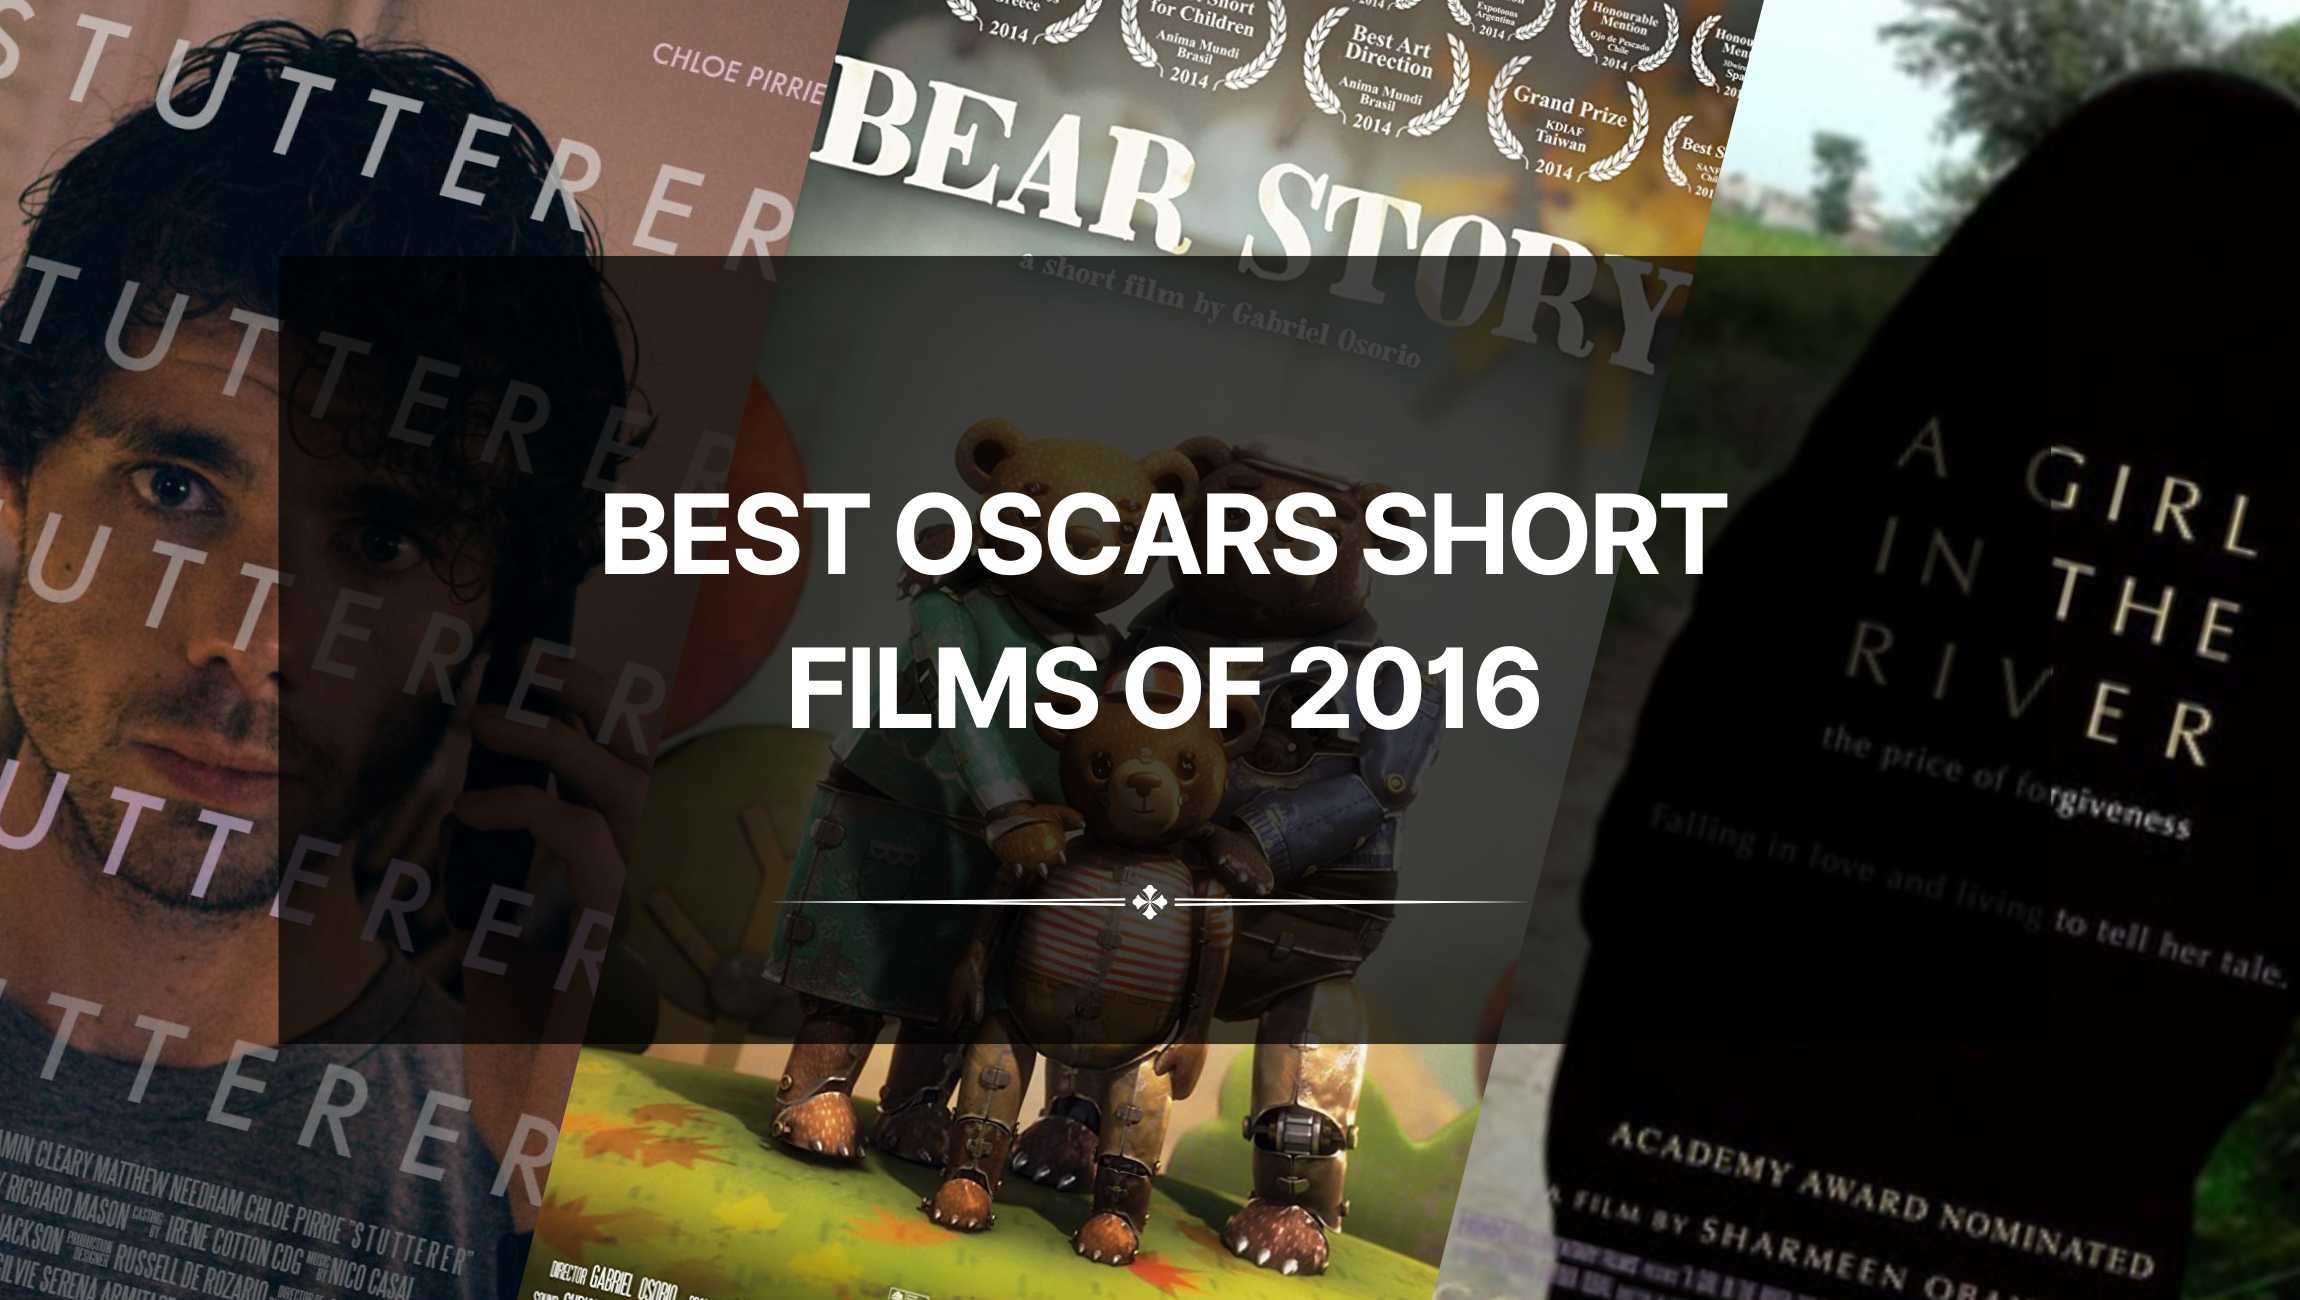 Best Oscars Short Films of 2016